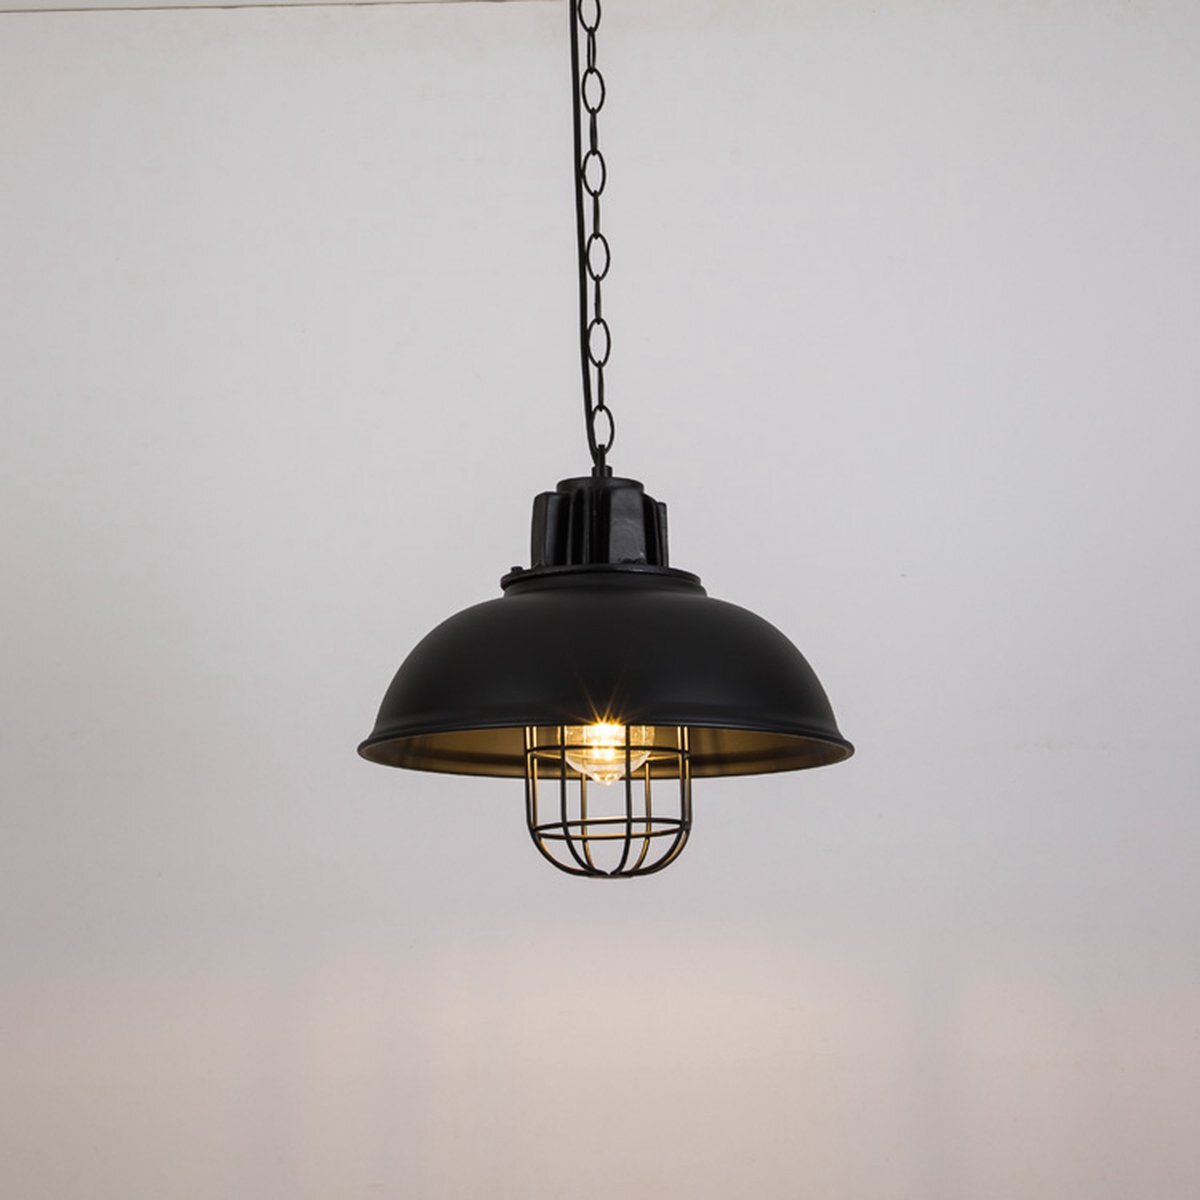 Homestyle Pro Zwarte robuuste hanglamp – kamerlamp – Plafondlamp – Keukenlamp – Ø33 cm – Zwart – Metaal – Halfrond – Industrieel – in lengte verstelbaar – E27 – 240V – zonder lichtbron